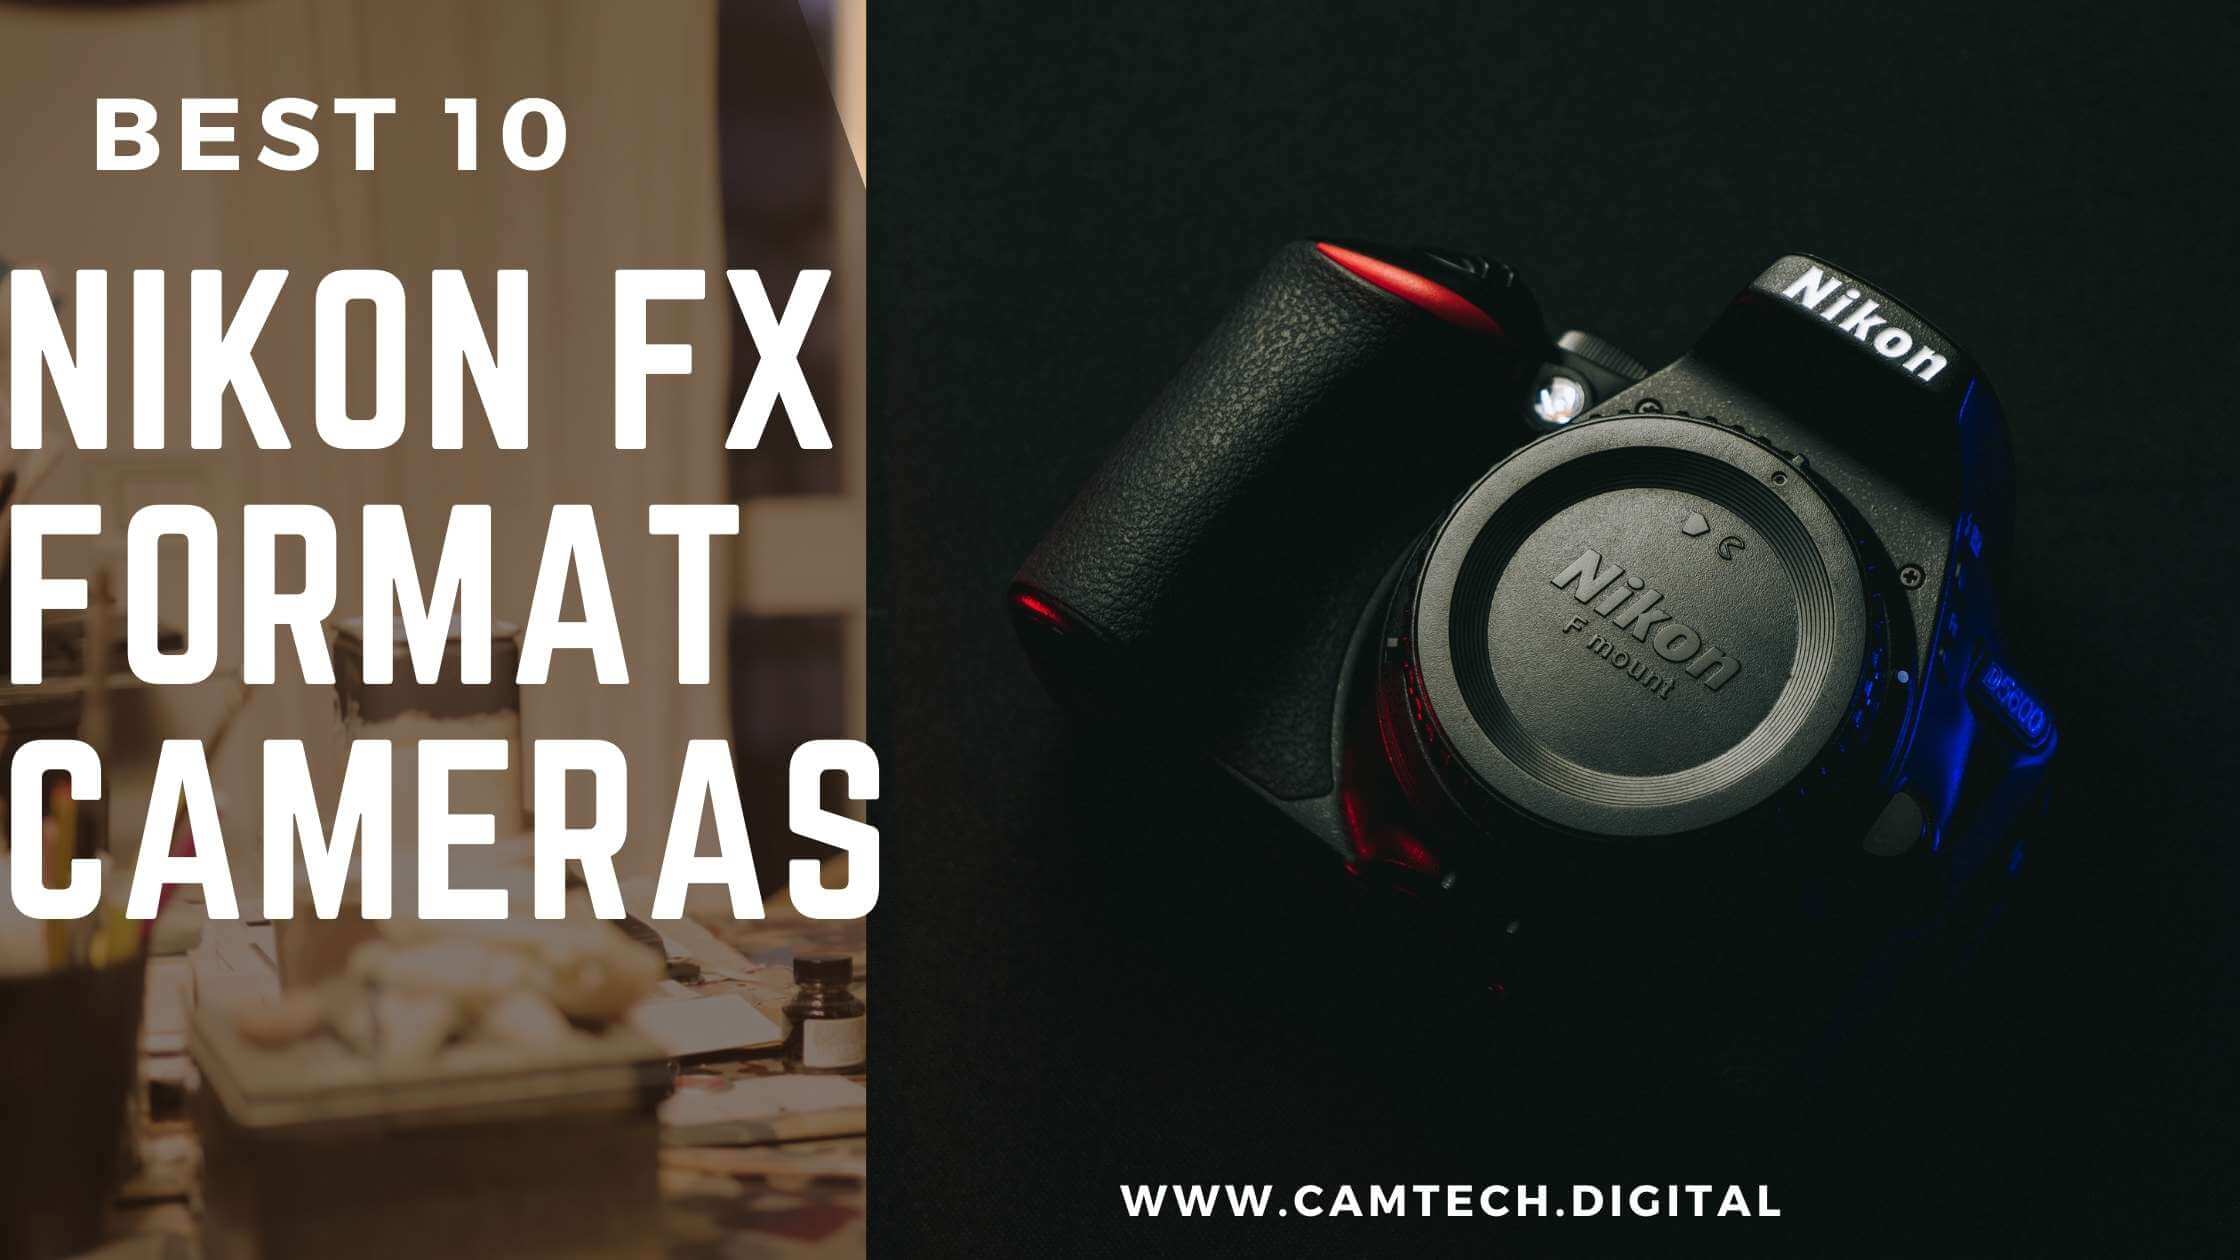 Nikon FX Format Cameras